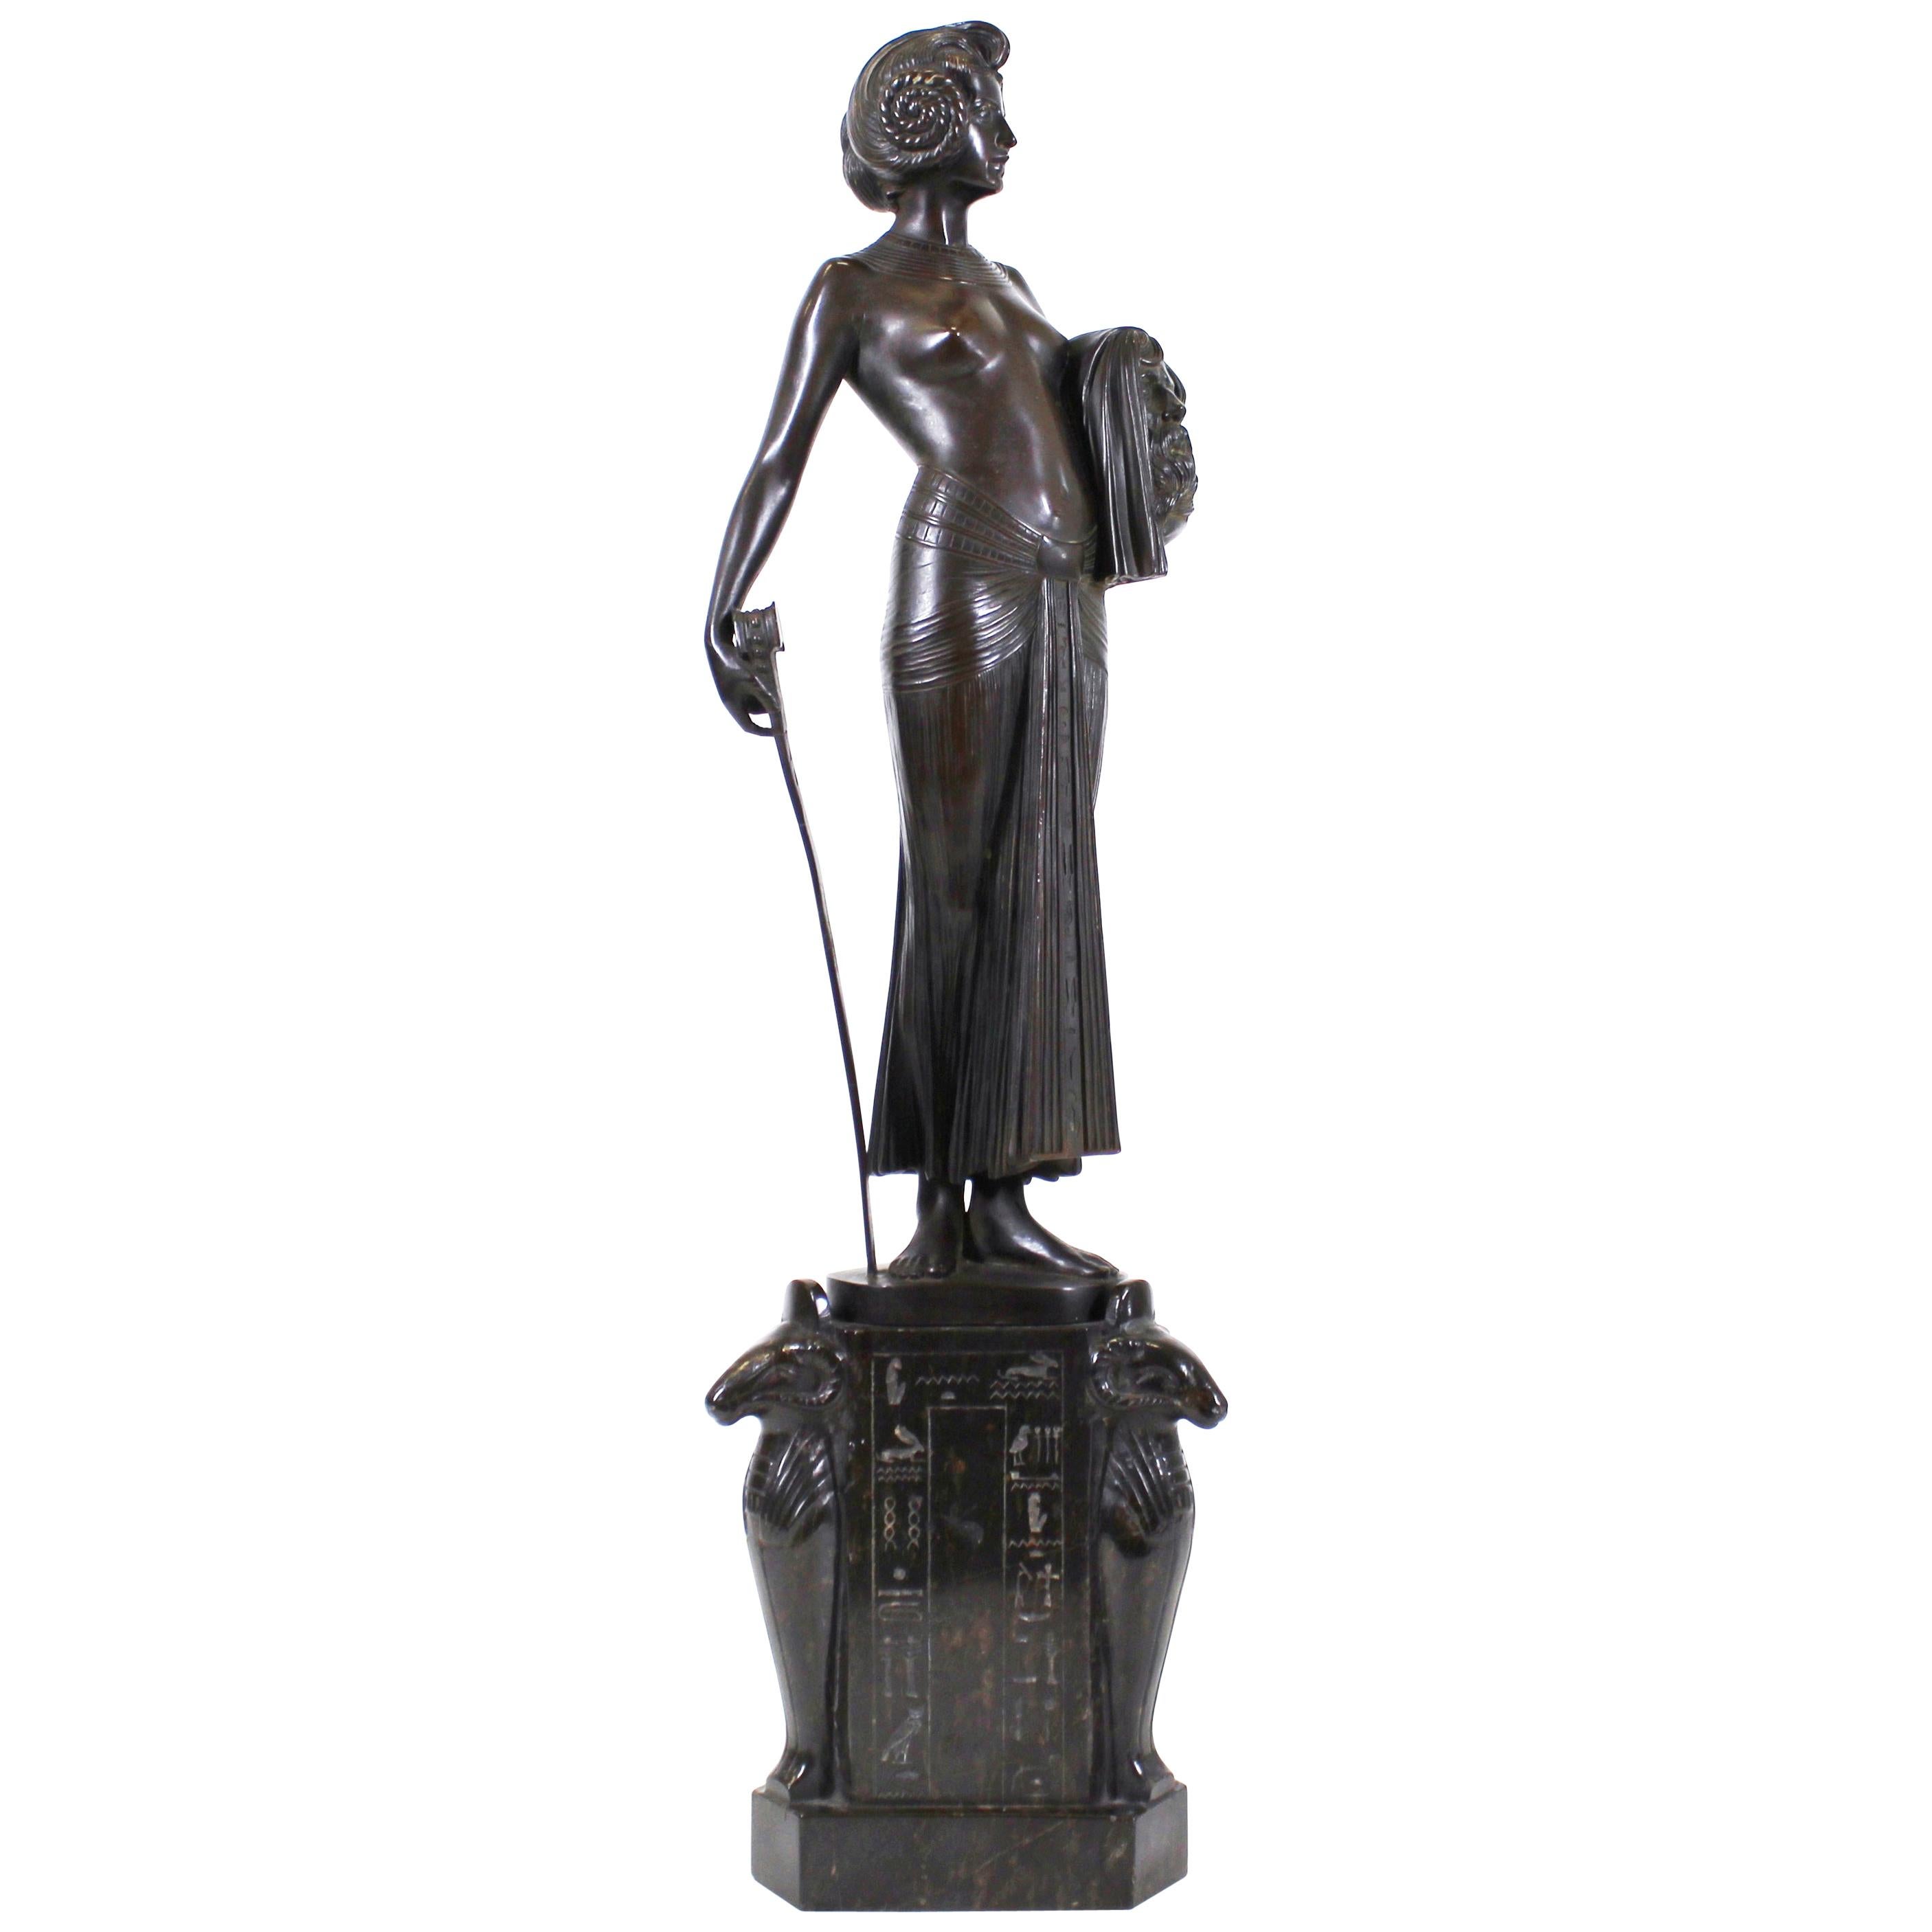 Sculpture en bronze « Judith » de Fritz Christ, style Jugendstil allemand, sur socle en marbre